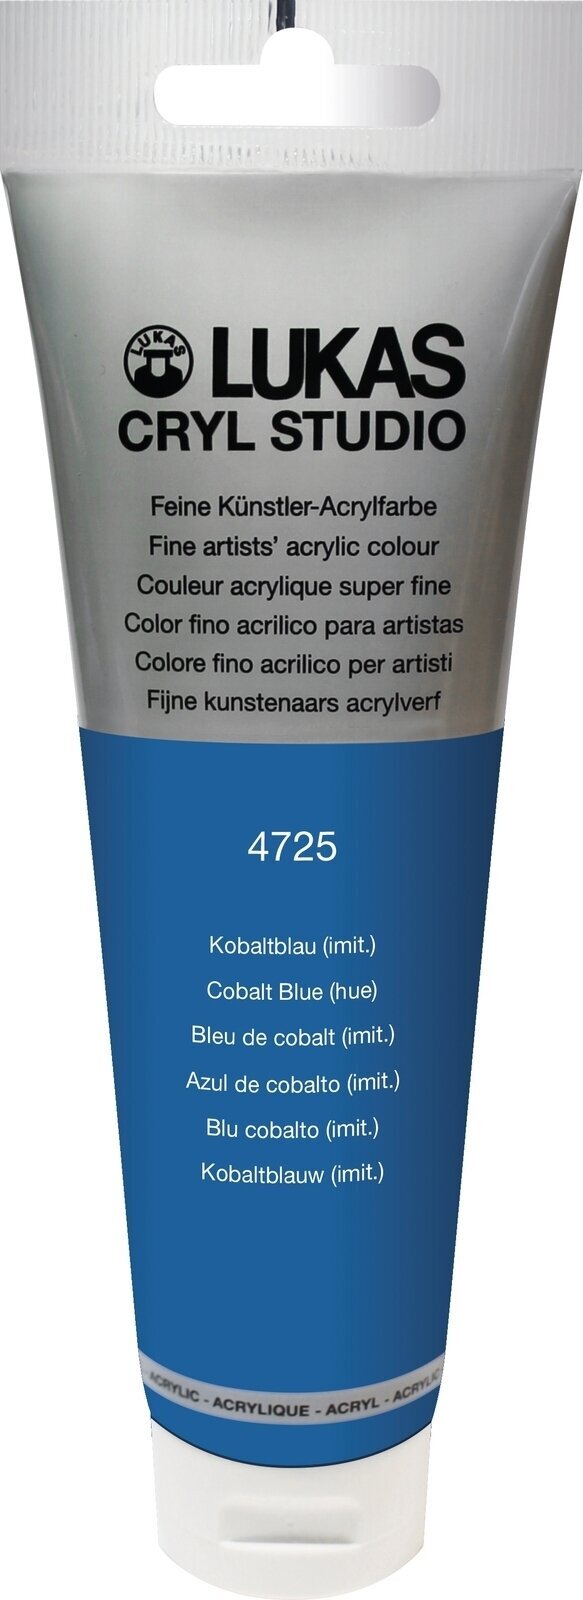 Tinta acrílica Lukas Cryl Studio Tinta acrílica 125 ml Cobalt Blue Hue